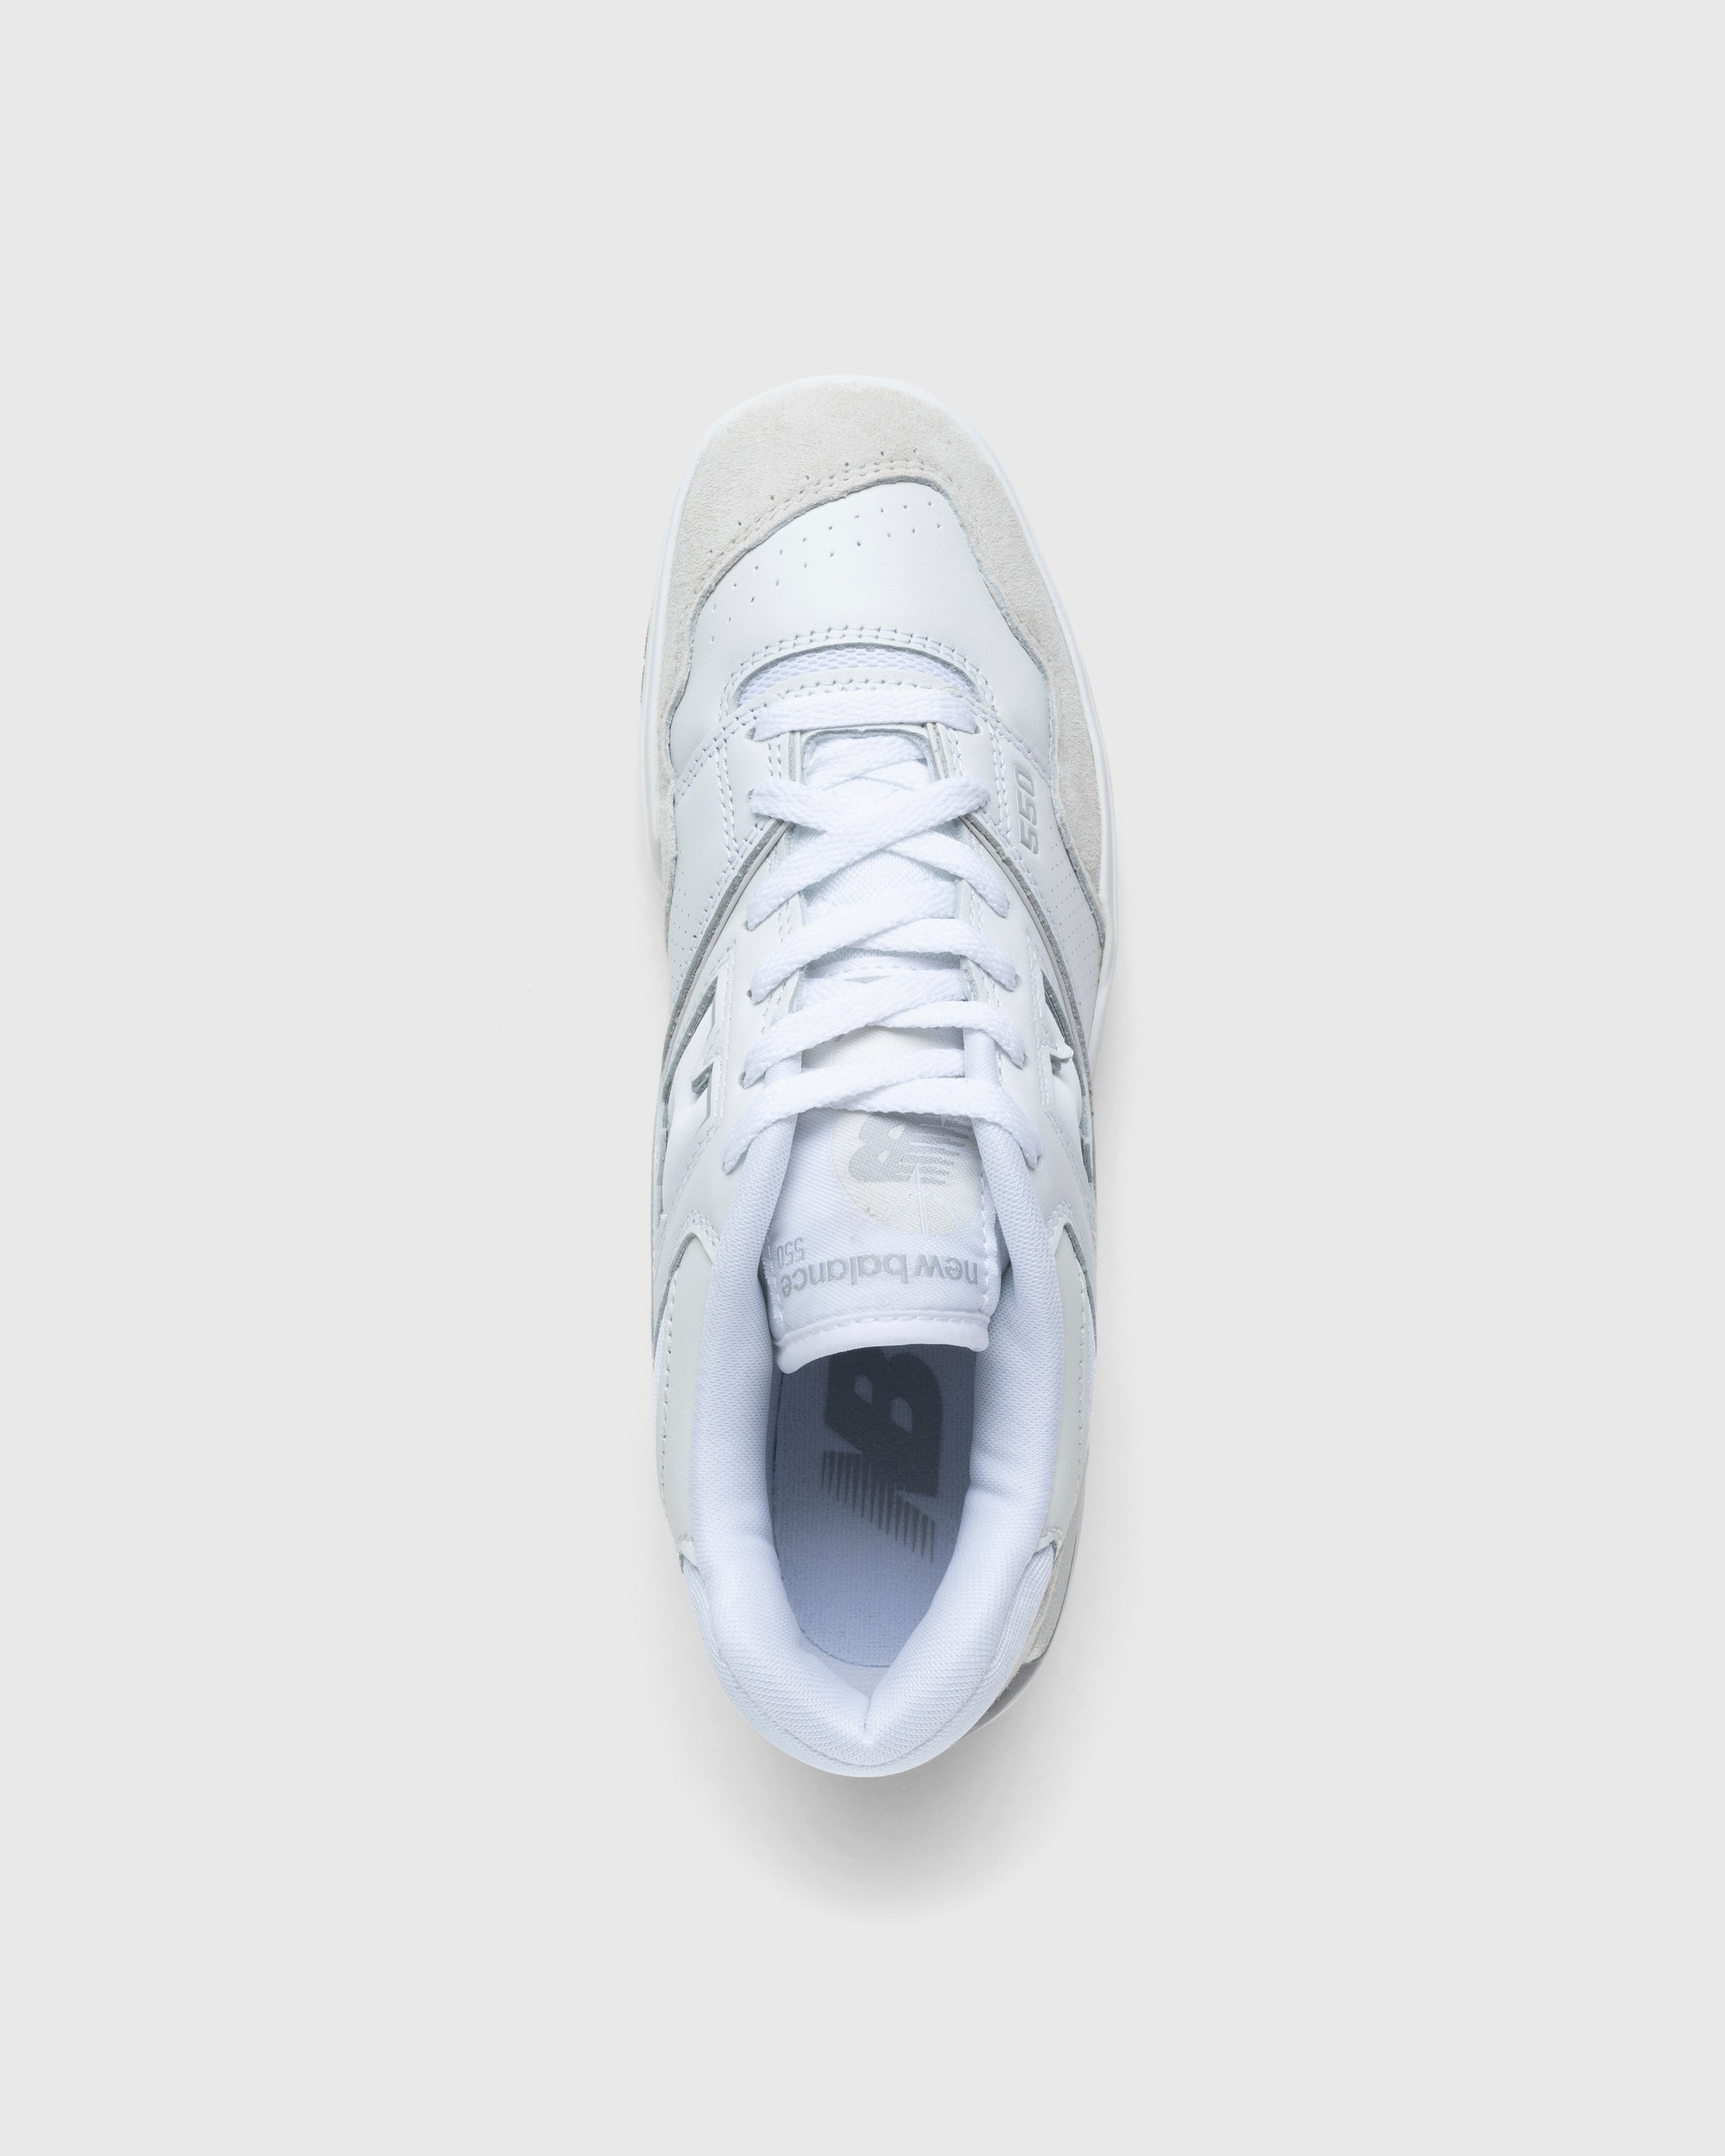 New Balance - BB550WGU White - Footwear - White - Image 5